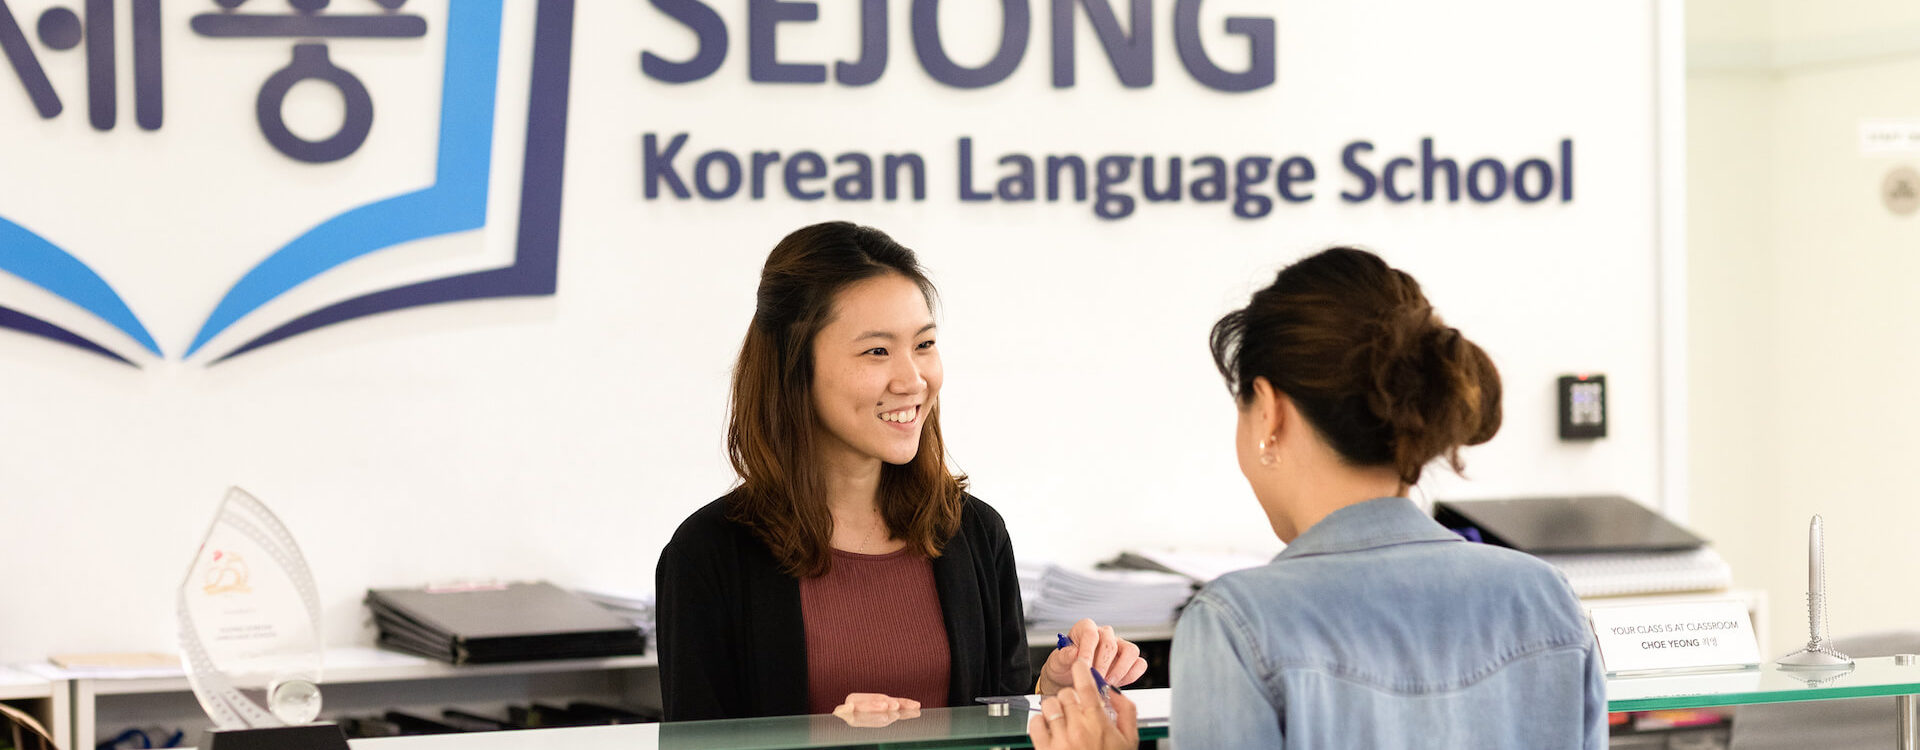  Sejong Korean Language School -Korean Language Centres Singapore   